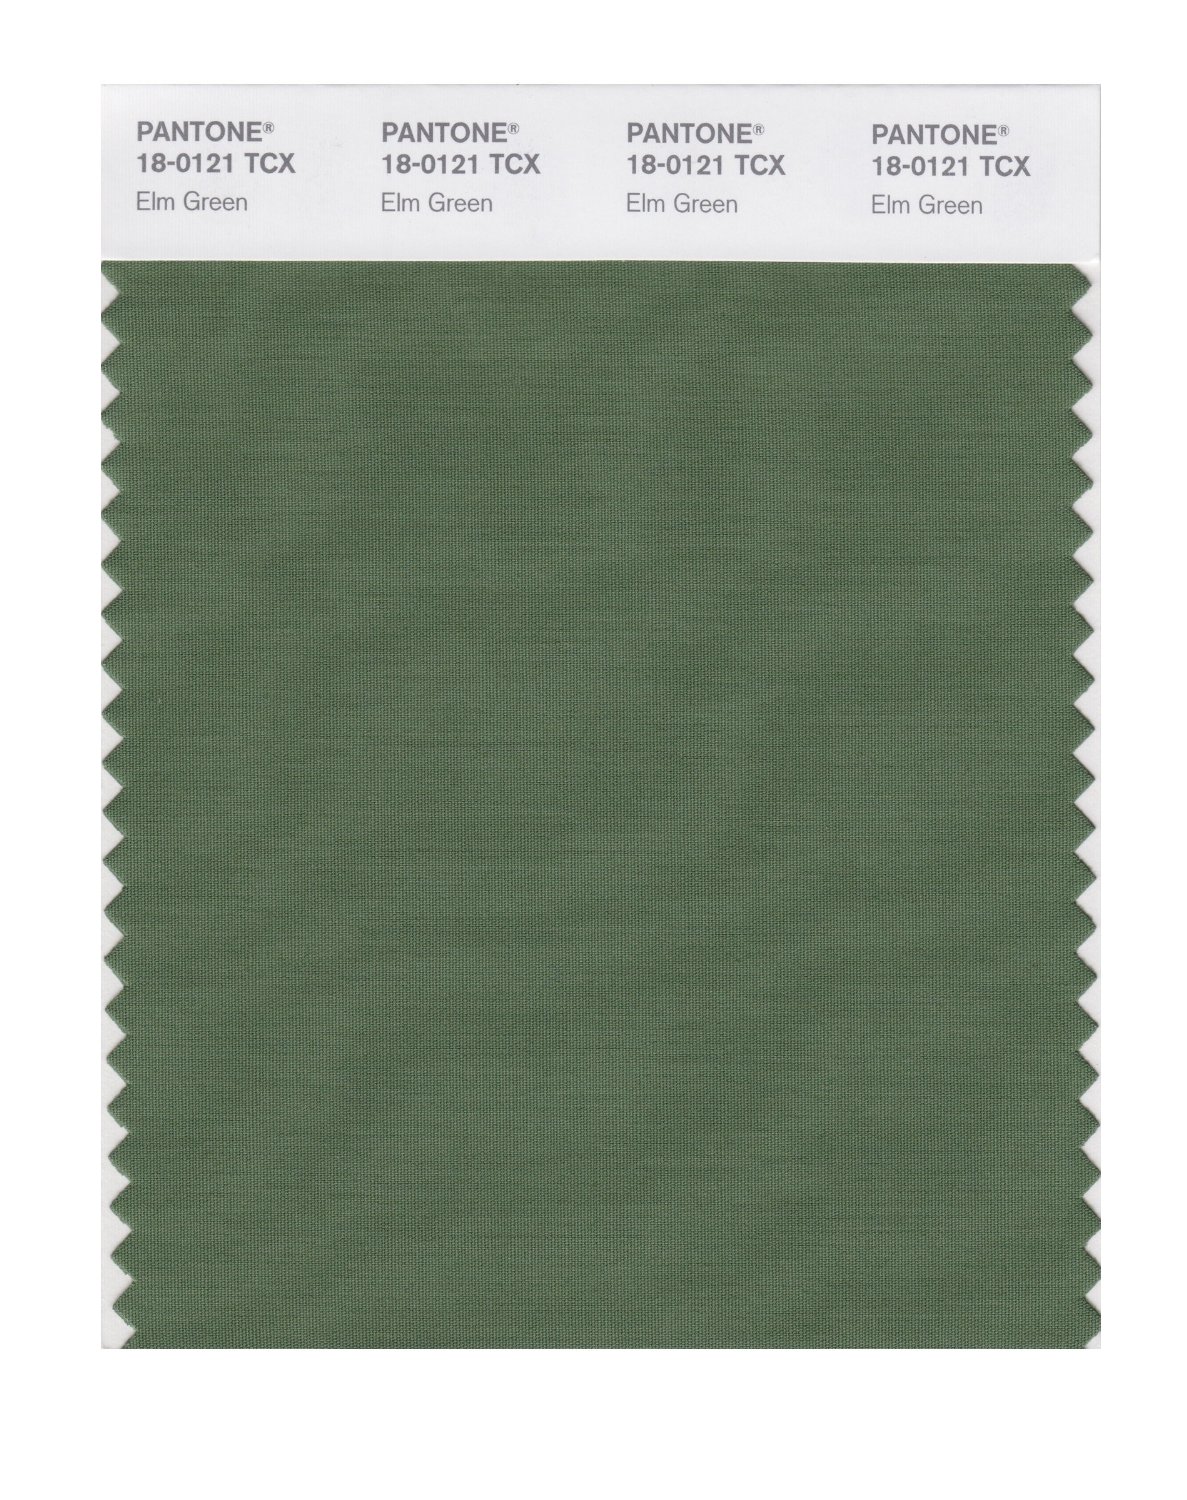 Pantone Cotton Swatch 18-0121 Elm Green